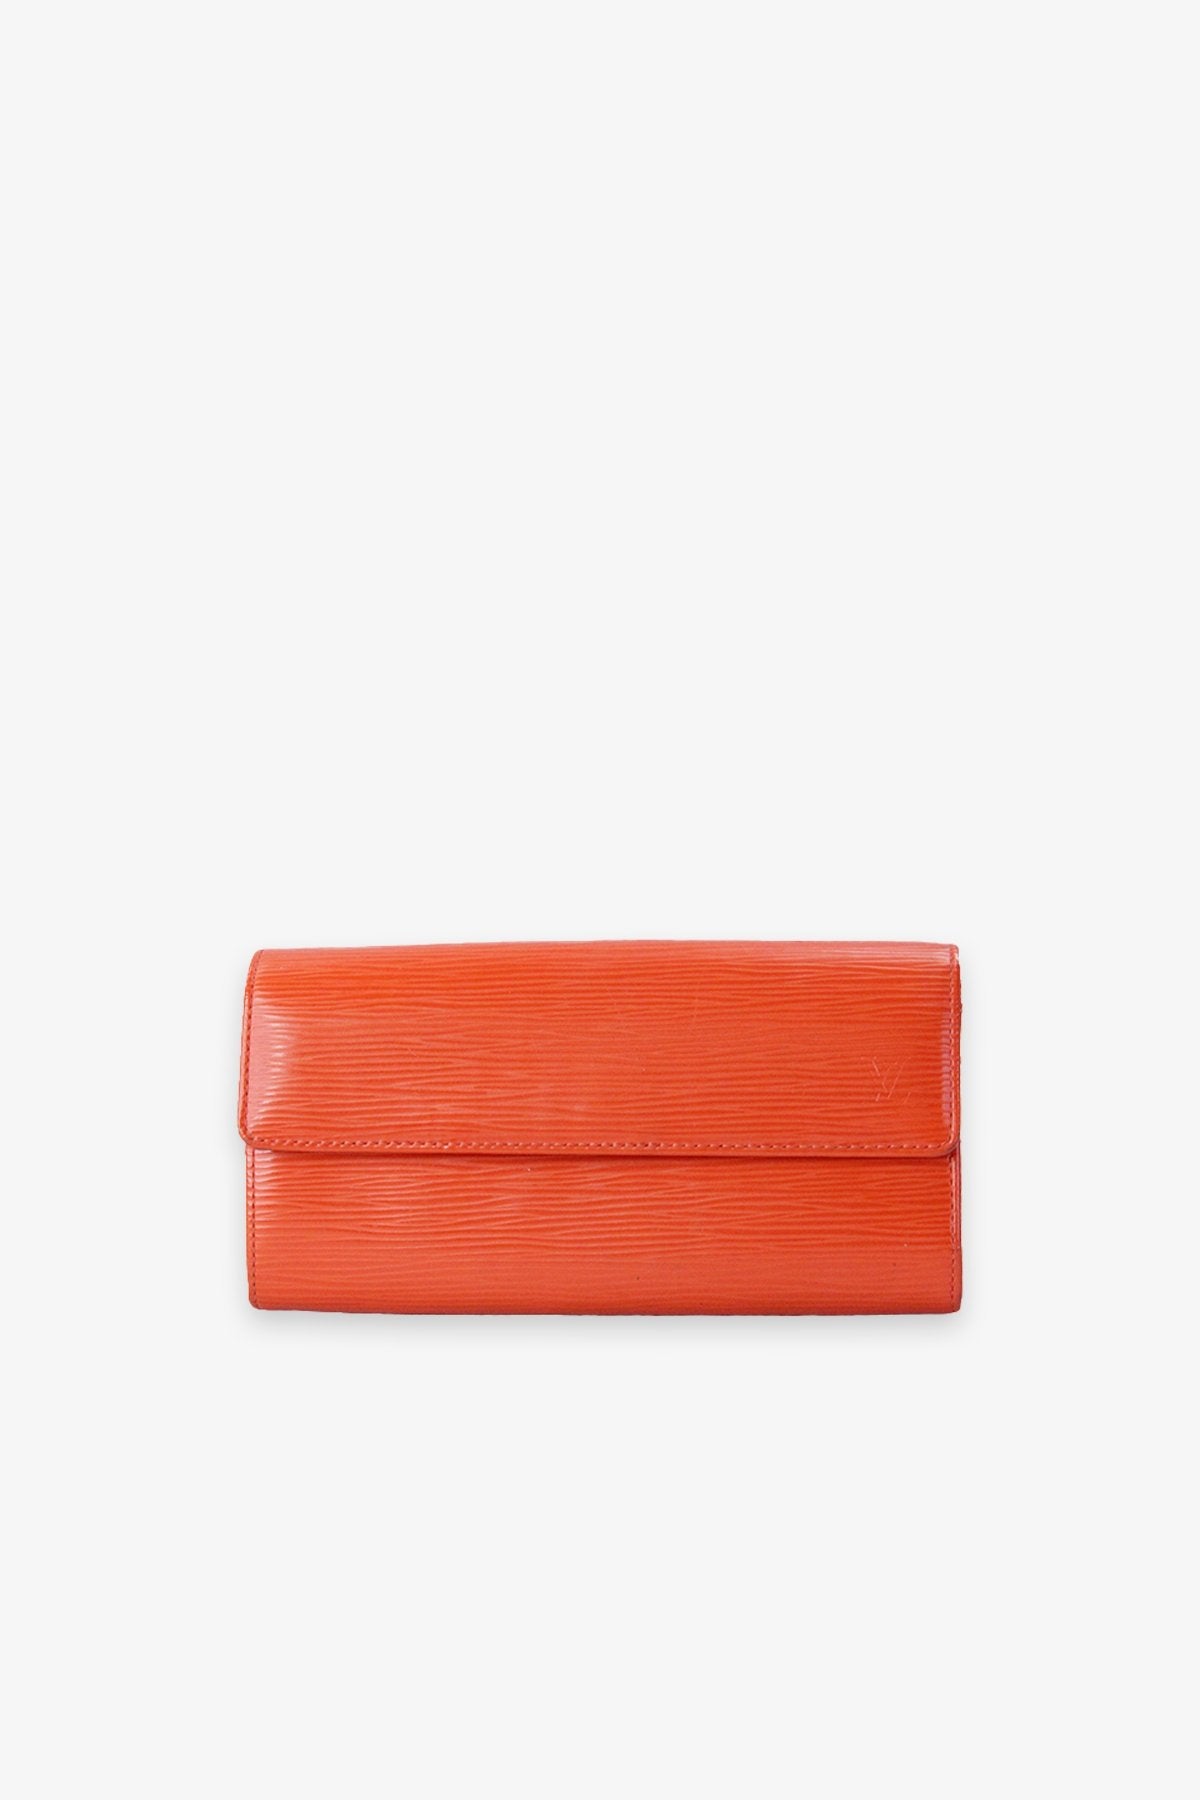 Louis Vuitton Orange Large Wallet in Epi Leather - shop-olivia.com